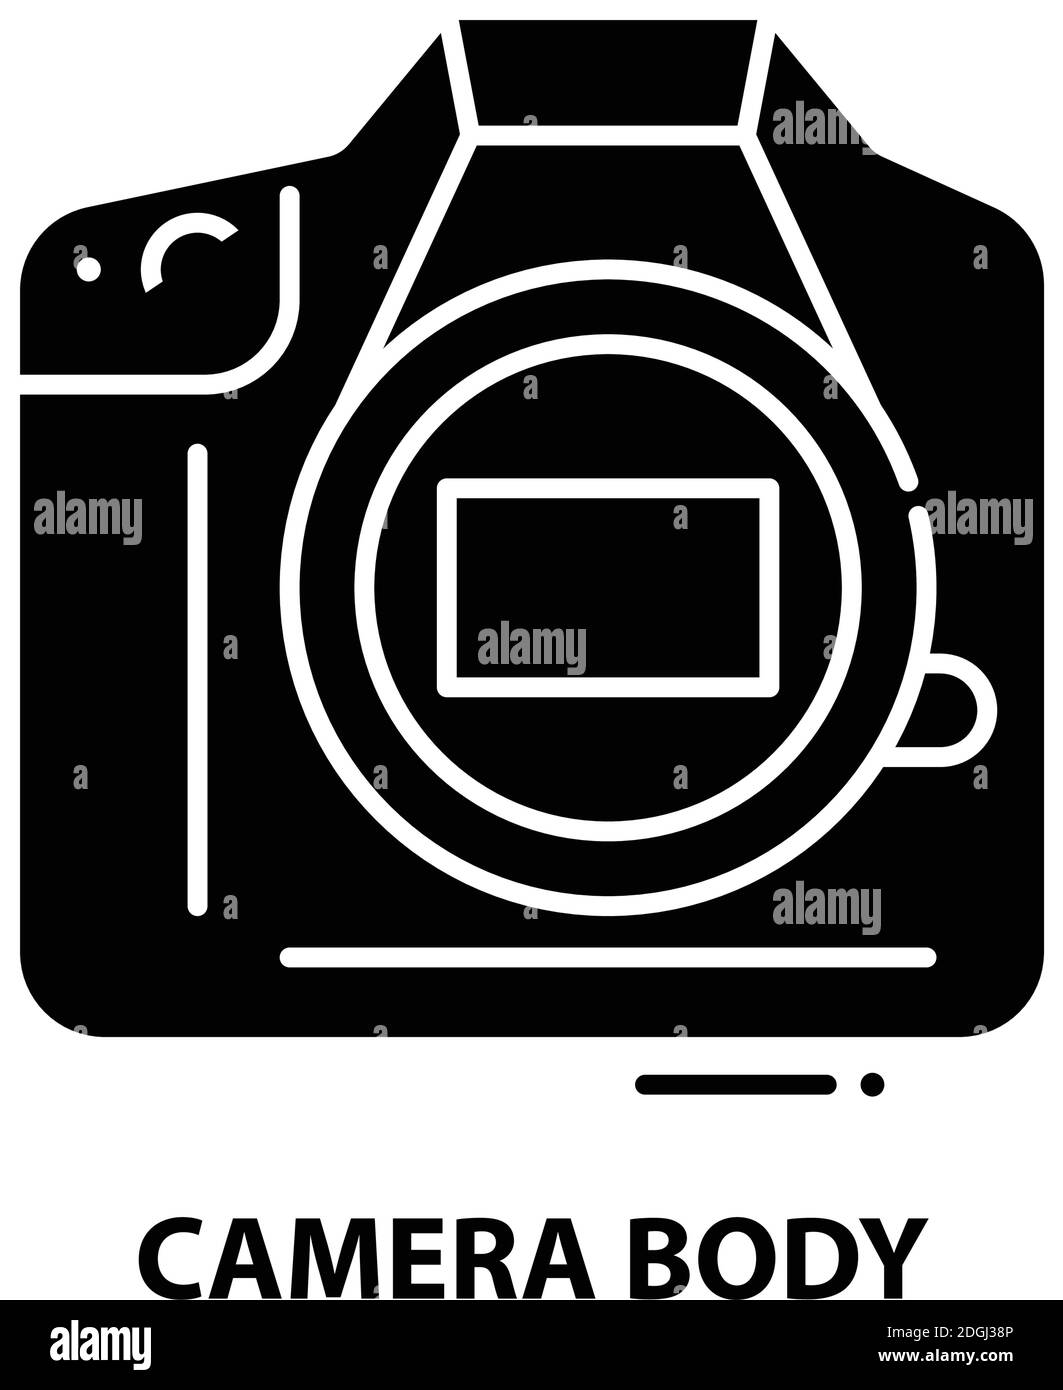 camera body icon, black vector sign with editable strokes, concept illustration Stock Vector